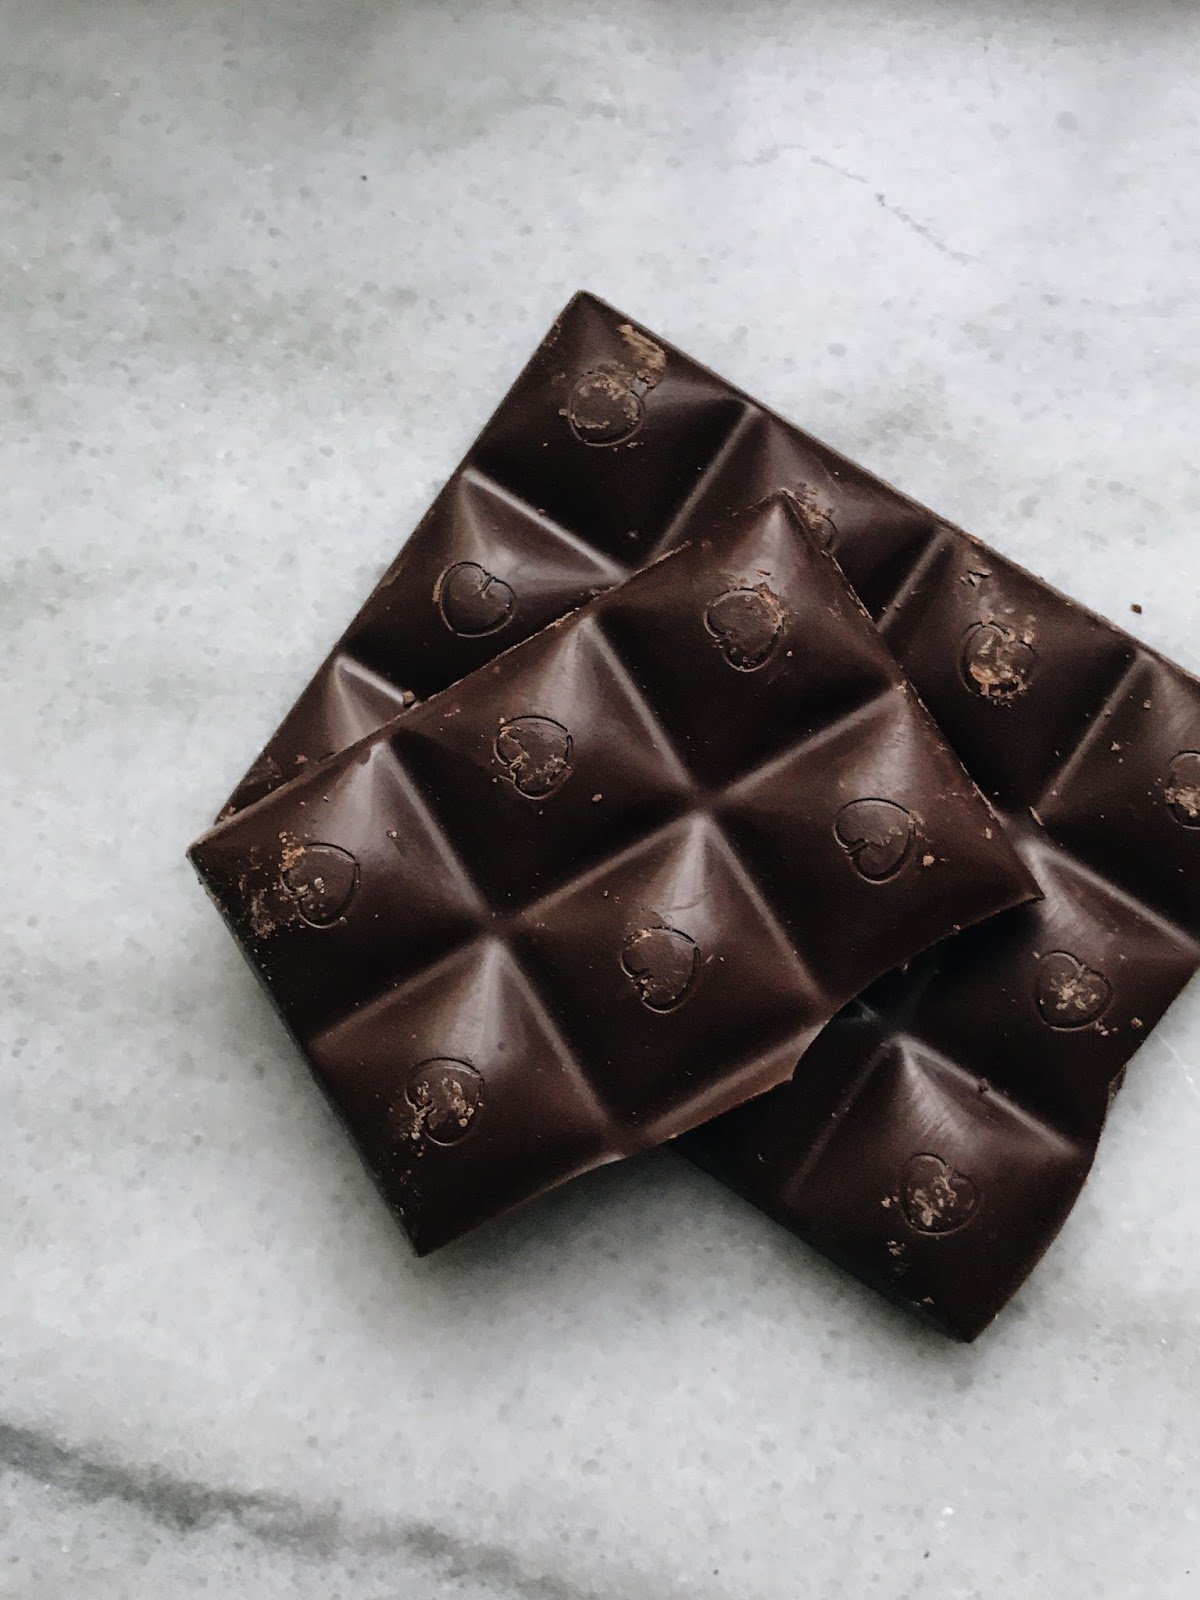 Шоколад квадрат. Шоколад квадратиками. Шоколадные плитки квадратики. Шоколадка квадратиками. Шоколадный квадрат.